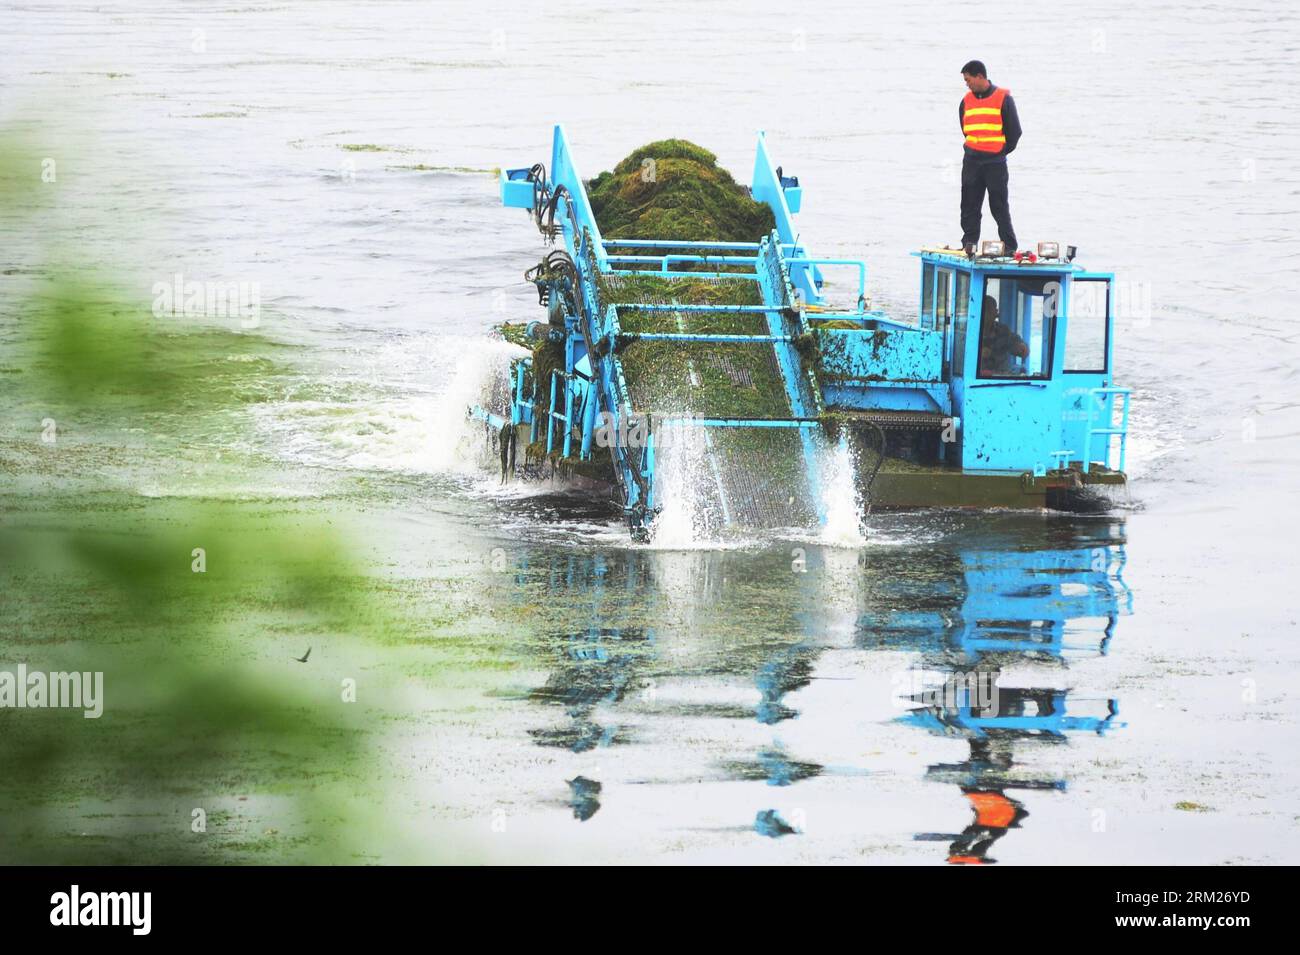 Bildnummer: 59720296 Datum: 28.05.2013 Copyright: imago/Xinhua membri dell'ente locale per l'acqua pulire le erbacce da acqua sovracoltivate con una macchina per migliorare l'ambiente del fiume Haihe nel comune di Tianjin, Cina settentrionale, 28 maggio 2013. (Xinhua/Wang Xiaoming) (wqq) CHINA-TIANJIN-HAIHE RIVER-WATERWEEDS (CN) PUBLICATIONxNOTxINxCHN Gesellschaft x2x xkg 2013 quer Aufmacher o0 Ökologie Wasser, Algen Algenpest 59720296 Data 28 05 2013 Copyright Imago XINHUA membri della Local Water Authority Clear Overgrown Waterweeds with a Machine to Improve the Environment of the Haihe River in Tianjin Foto Stock